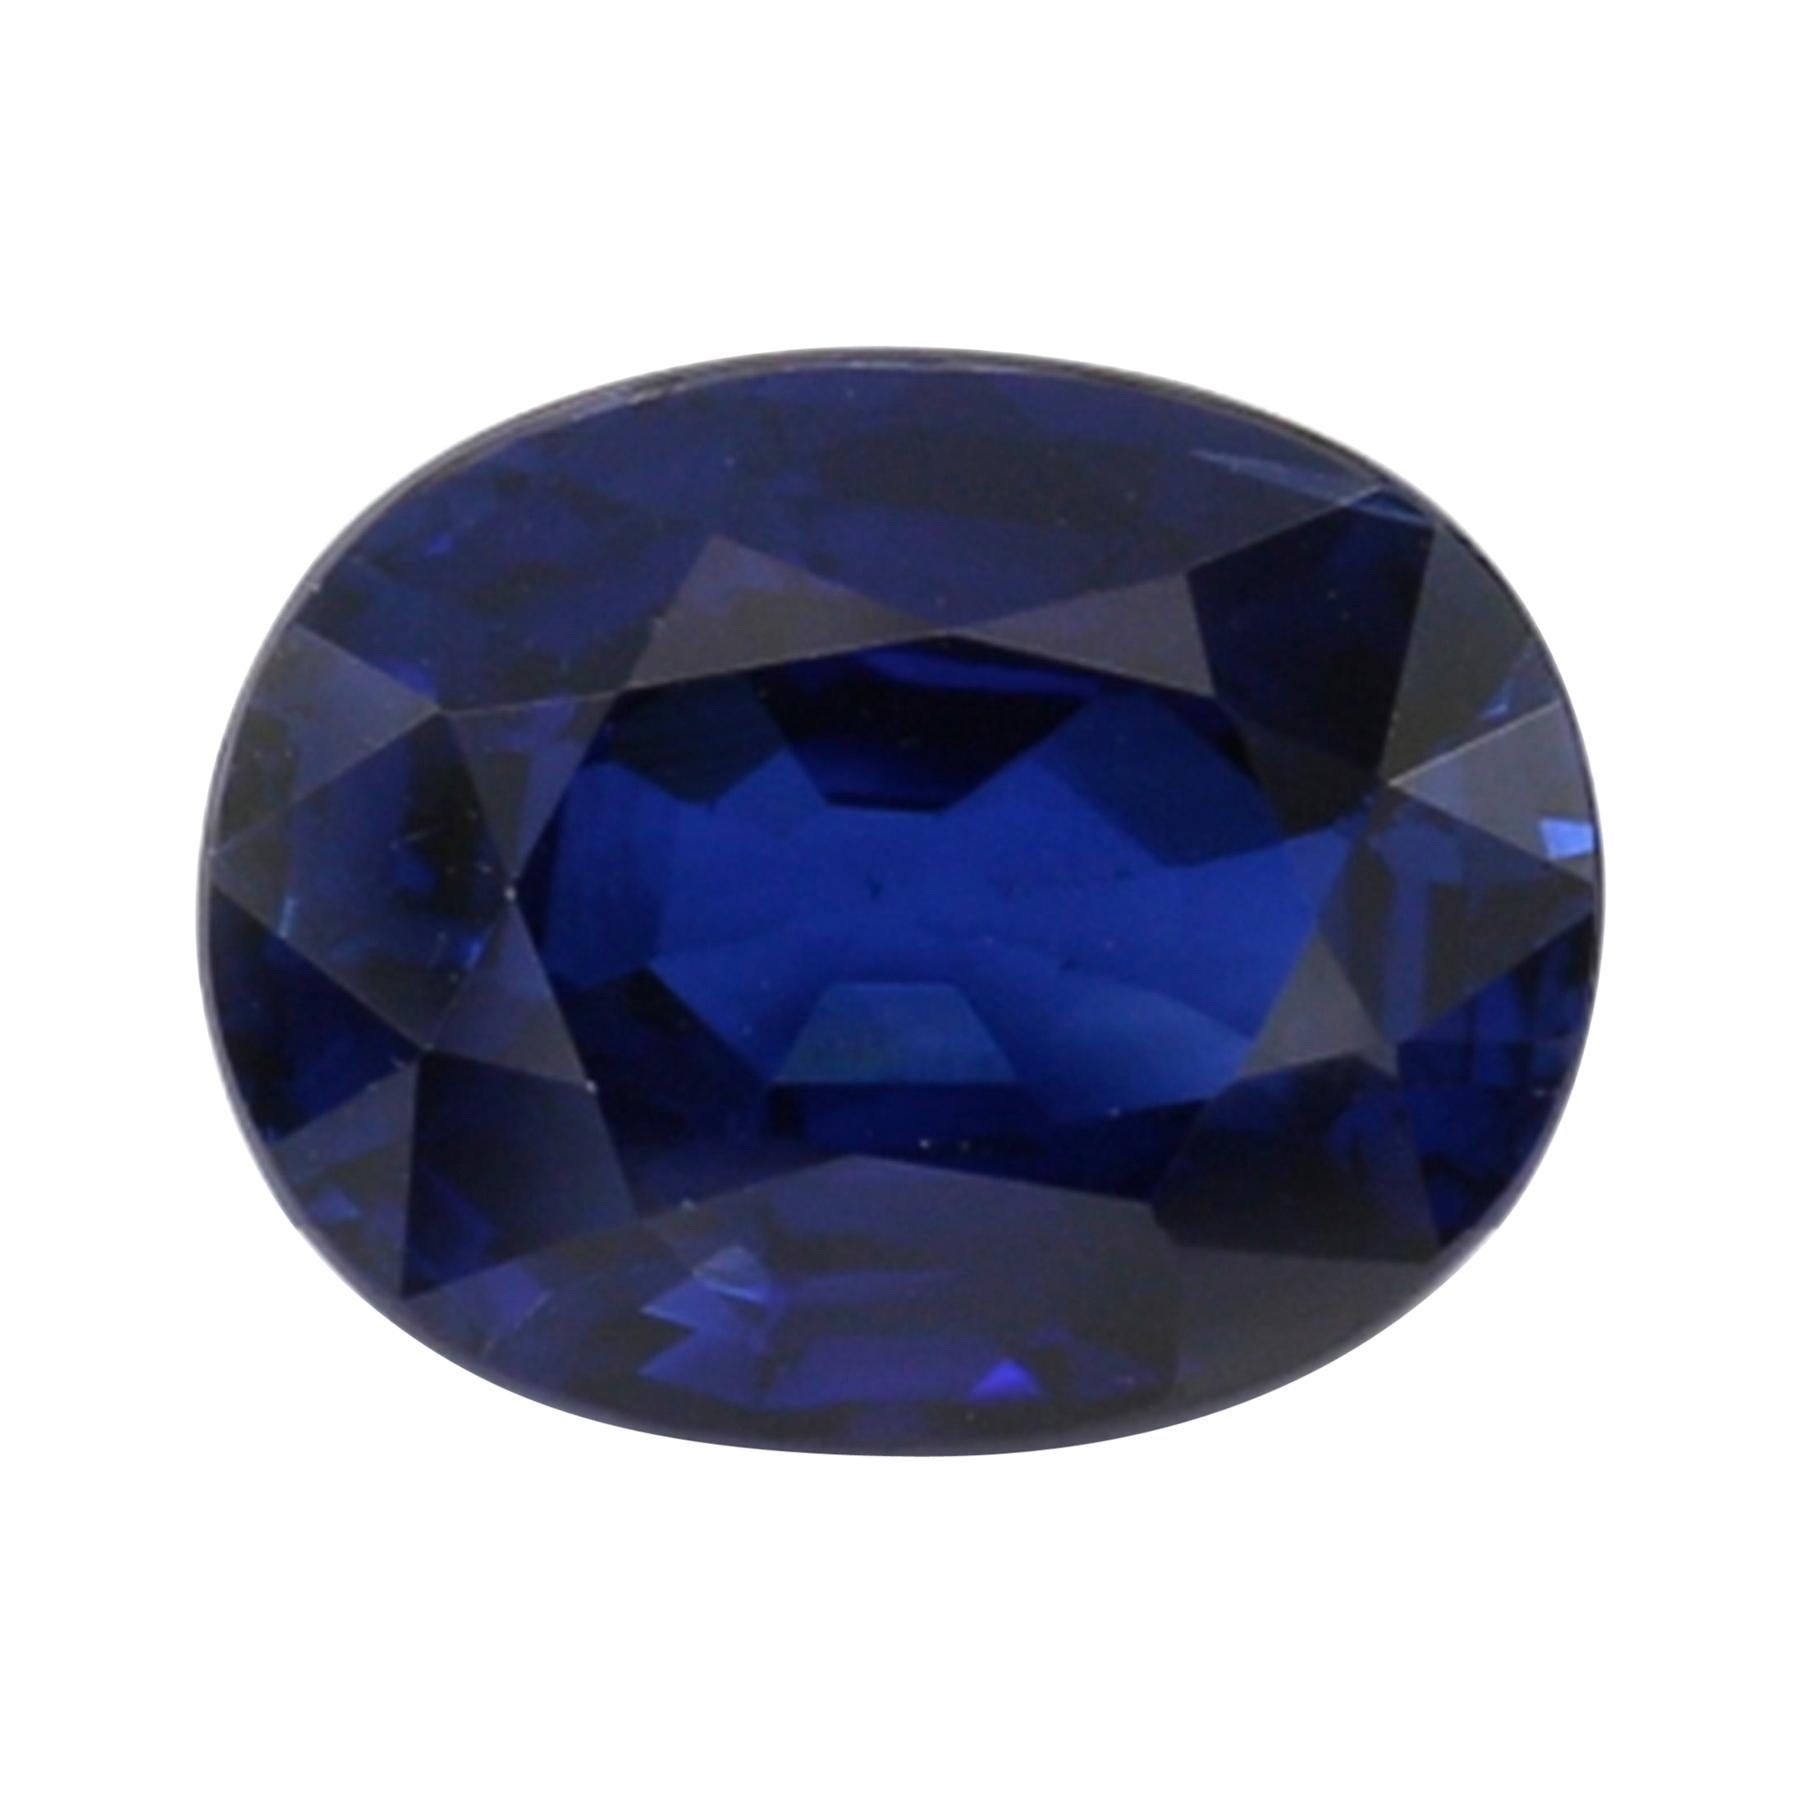 Saphir bleu royal ovale certifié GRS de 2,88 carats